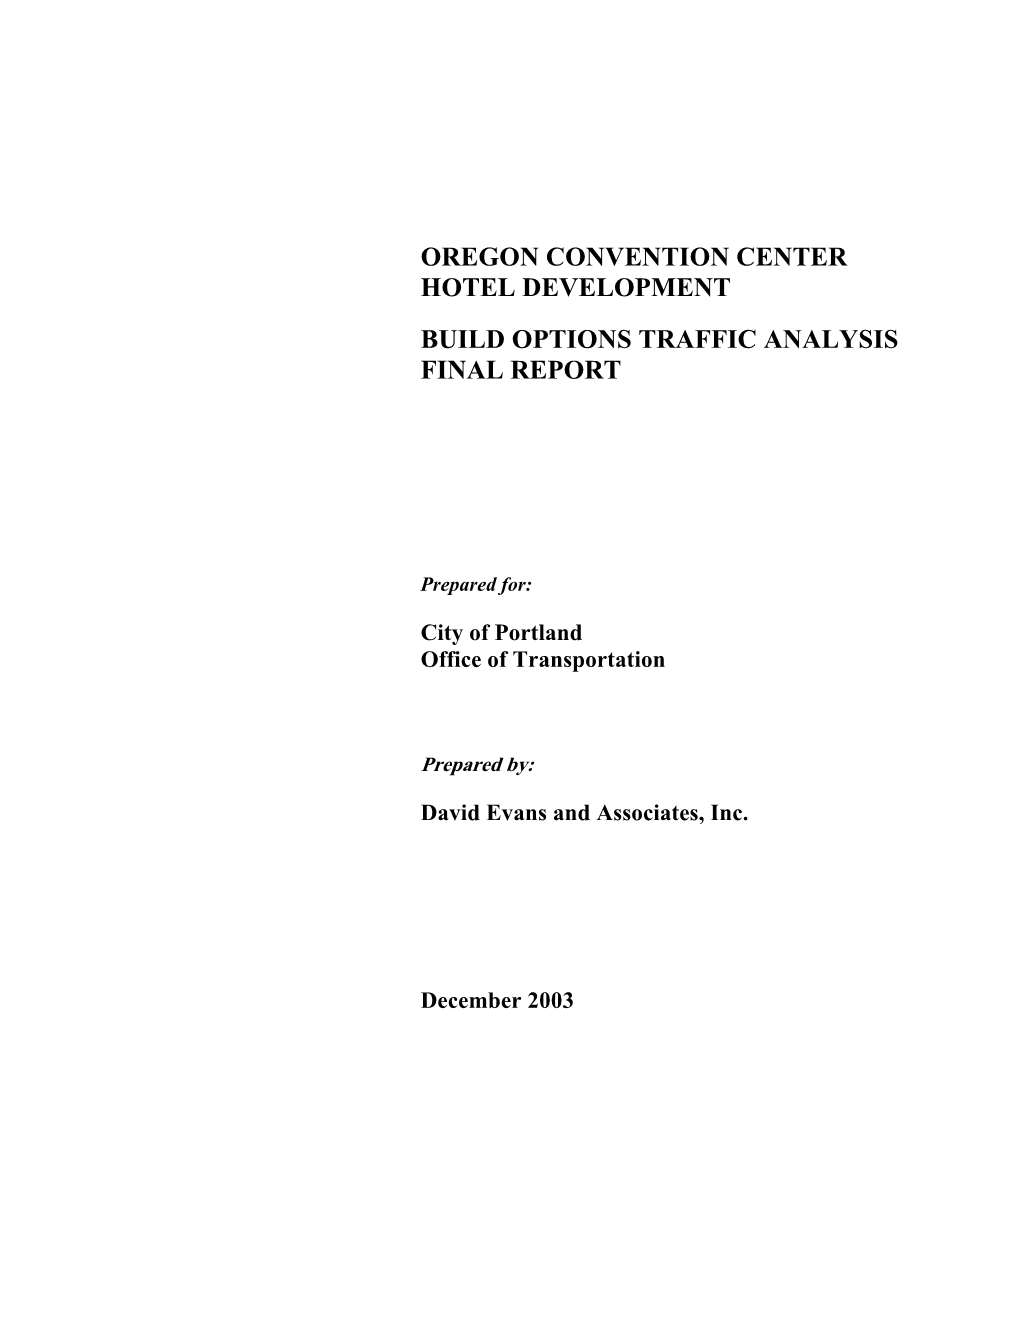 Oregon Convention Center Hotel Development Build Options Traffic Analysis Final Report